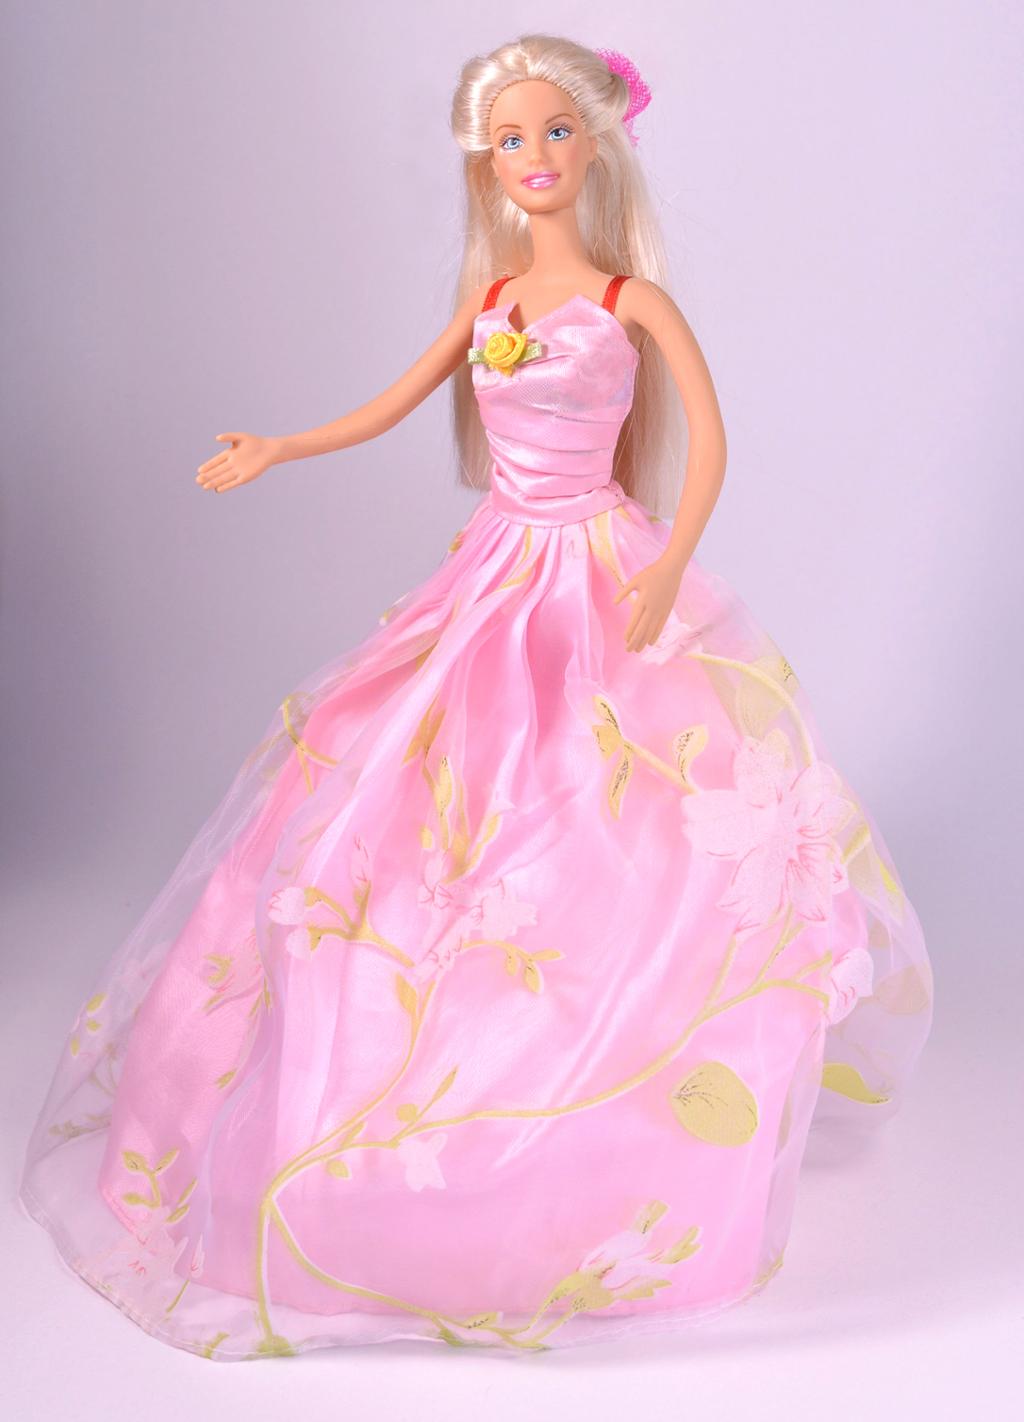 Barbie-dukke i rosa kjole. Foto.